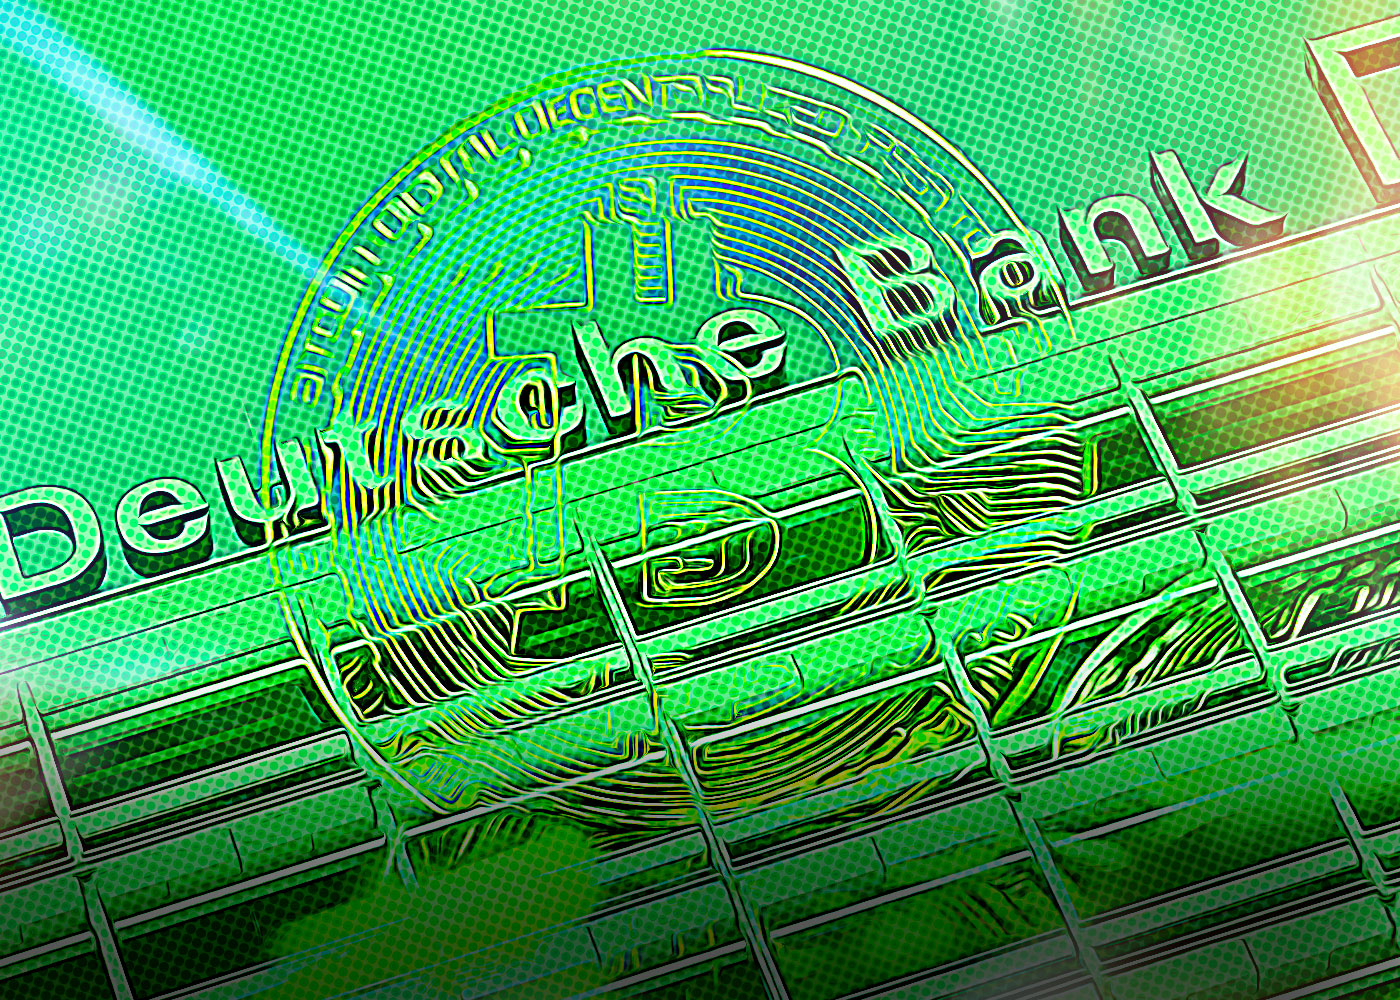 Deutsche Bank Applies for Crypto License, Fueling Market Optimism = The Bit Journal